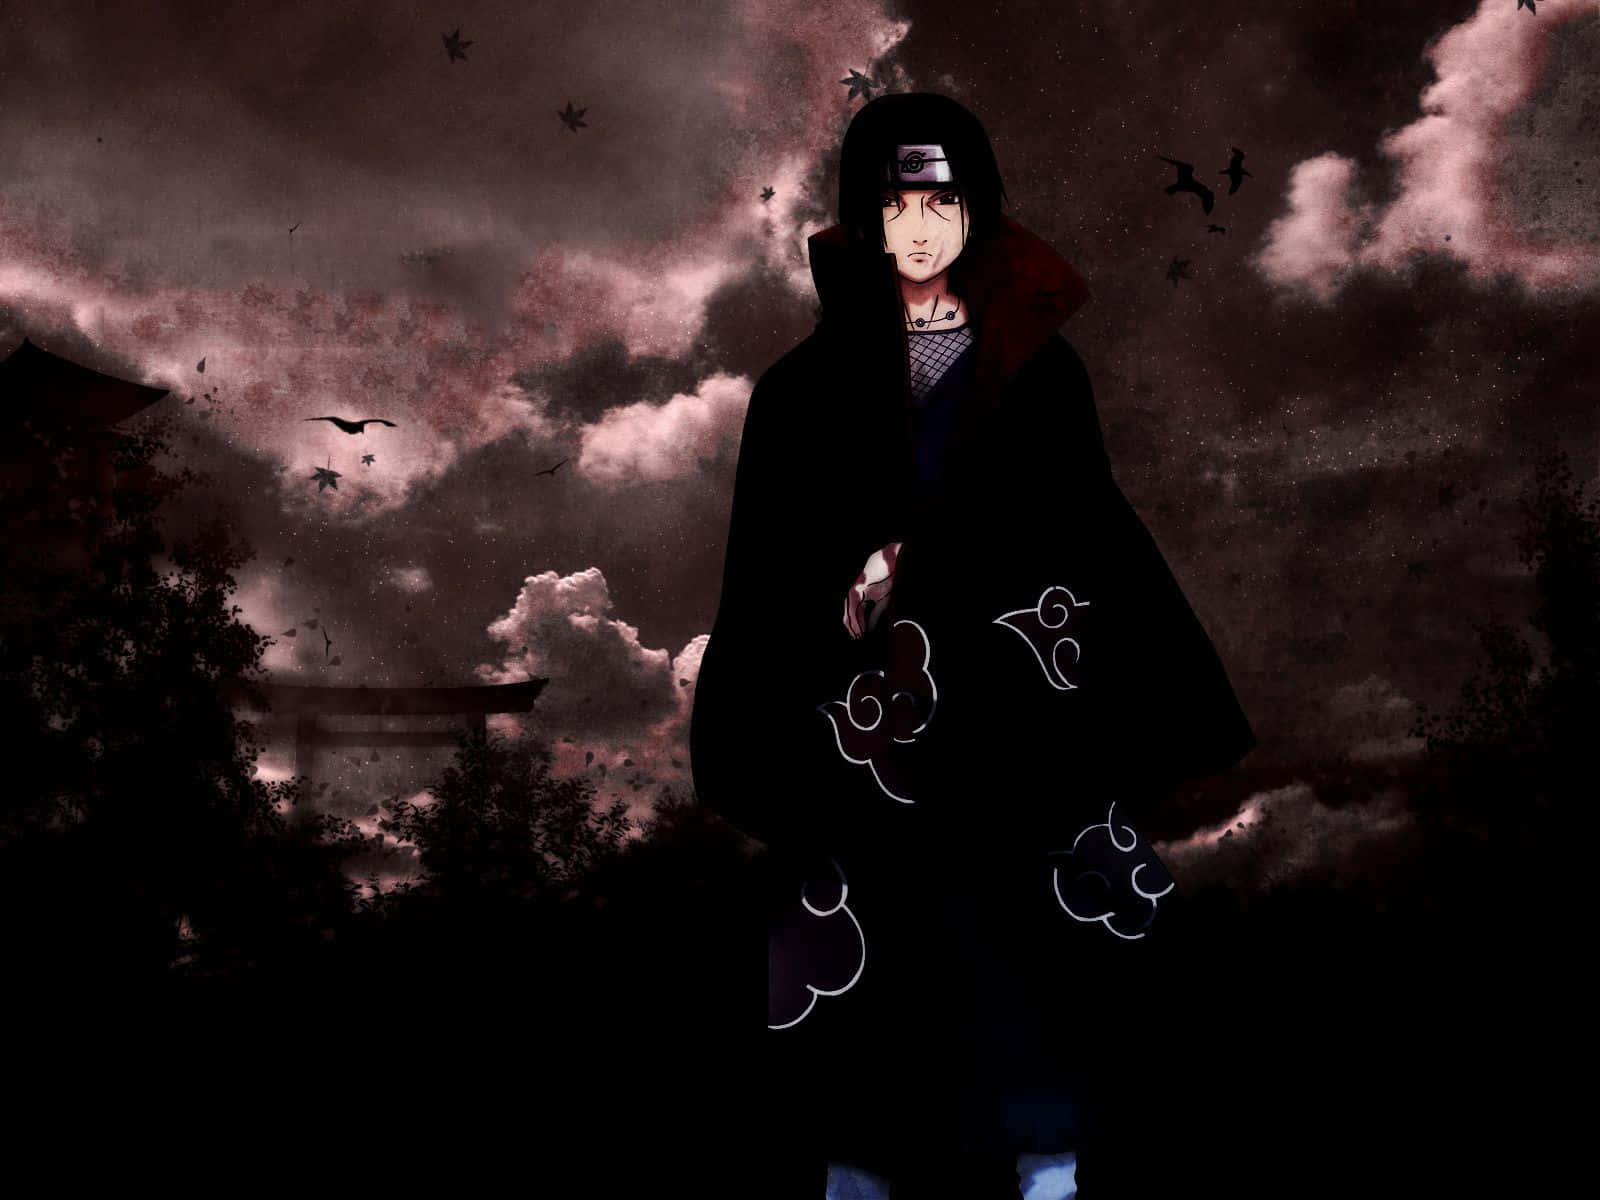 Itachi Aesthetic Wearing Akatsuki Cloud Robe With Crows Flying In Dark Clouds. Wallpaper